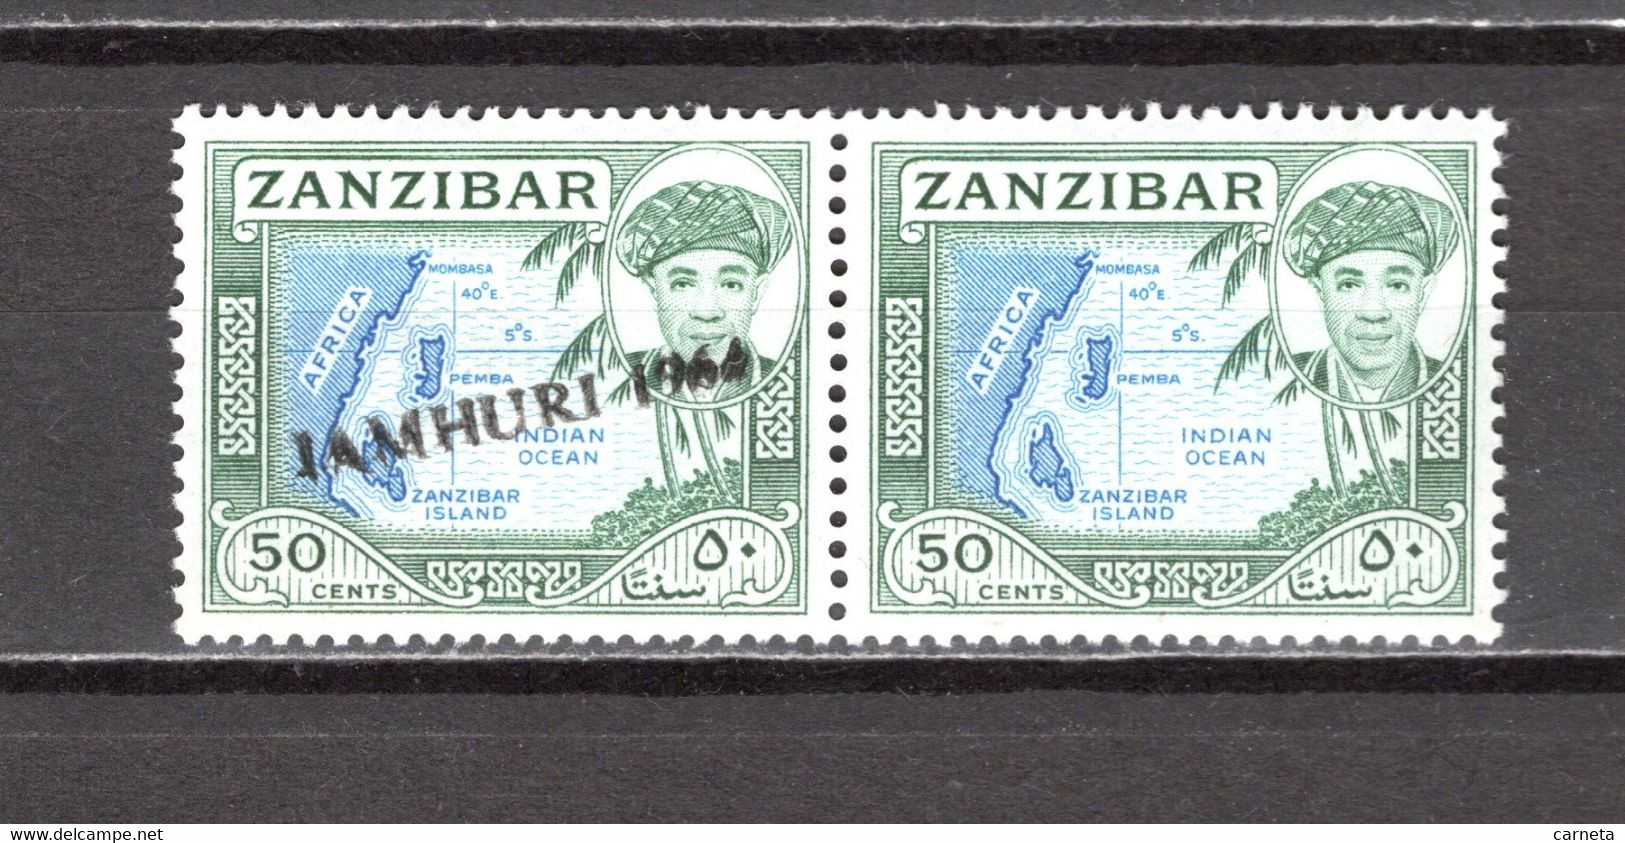 ZANZIBAR    N° 270 TENANT A 249 SURCHARGE TENANT A NON SURCHARGE     NEUFS SANS CHARNIERE   COTE  ? €  CARTE DES ILES - Zanzibar (1963-1968)